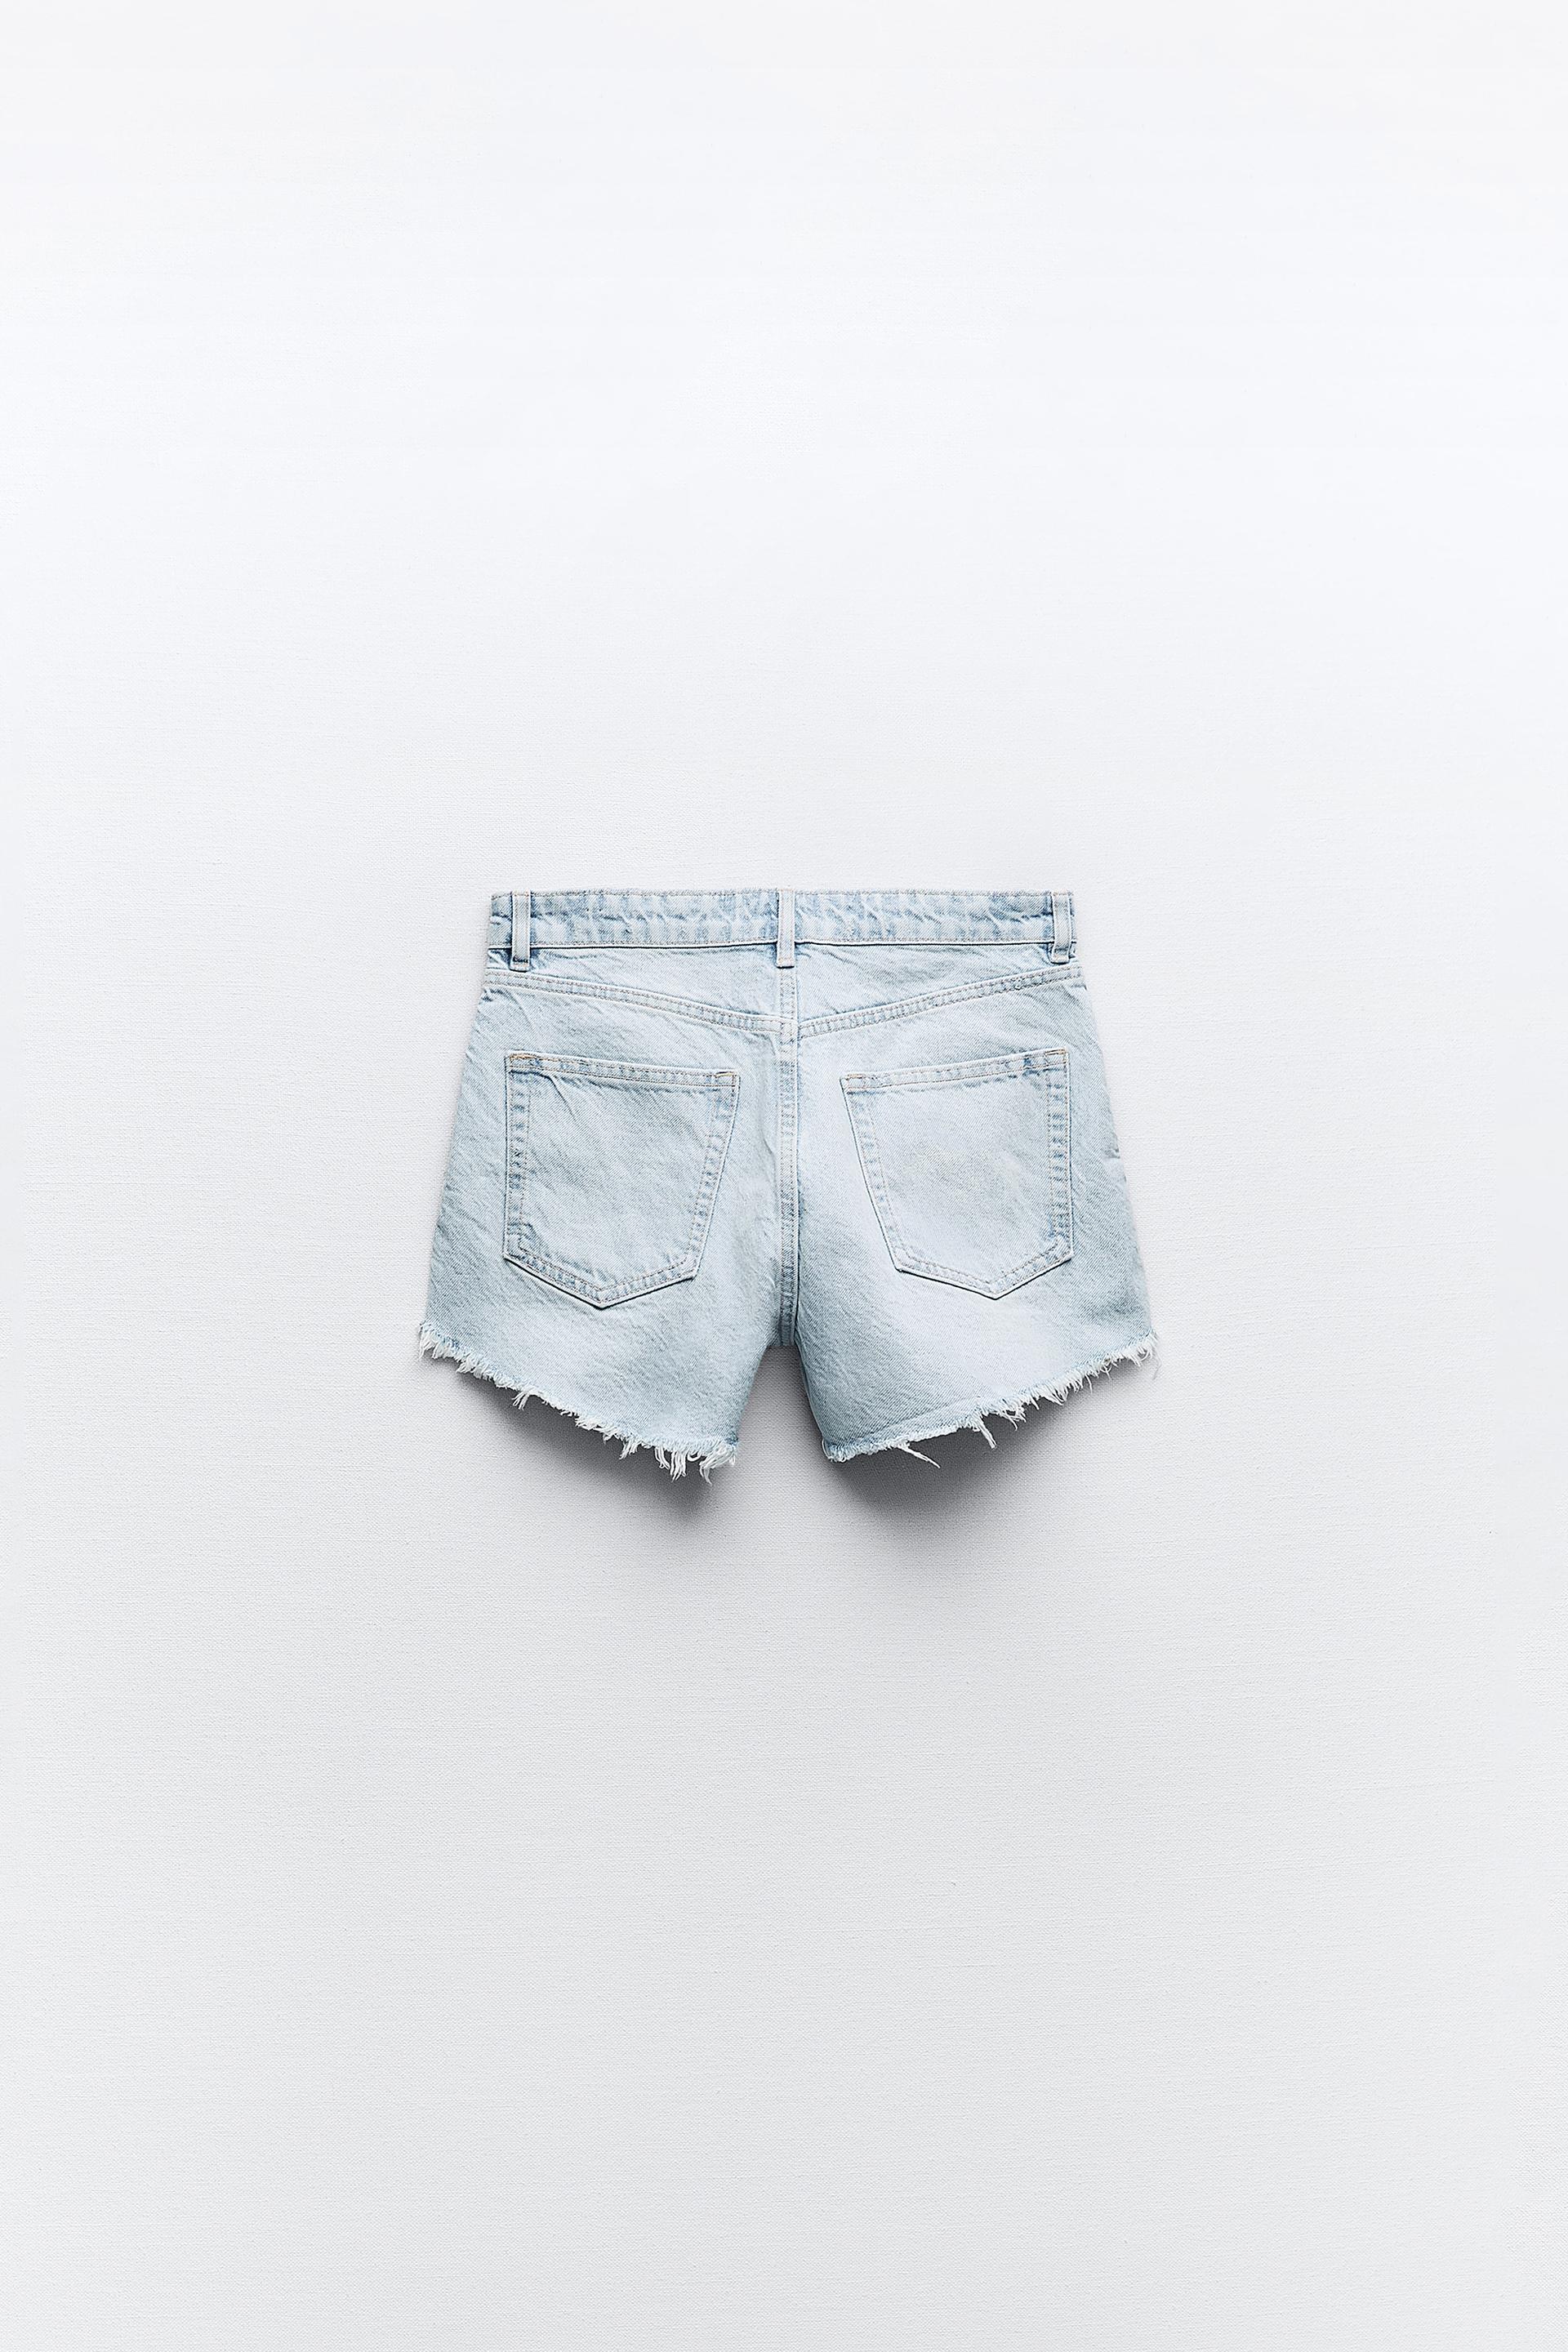 Garimpário Brechó Online - Shorts Jeans Cintura Alta Zara